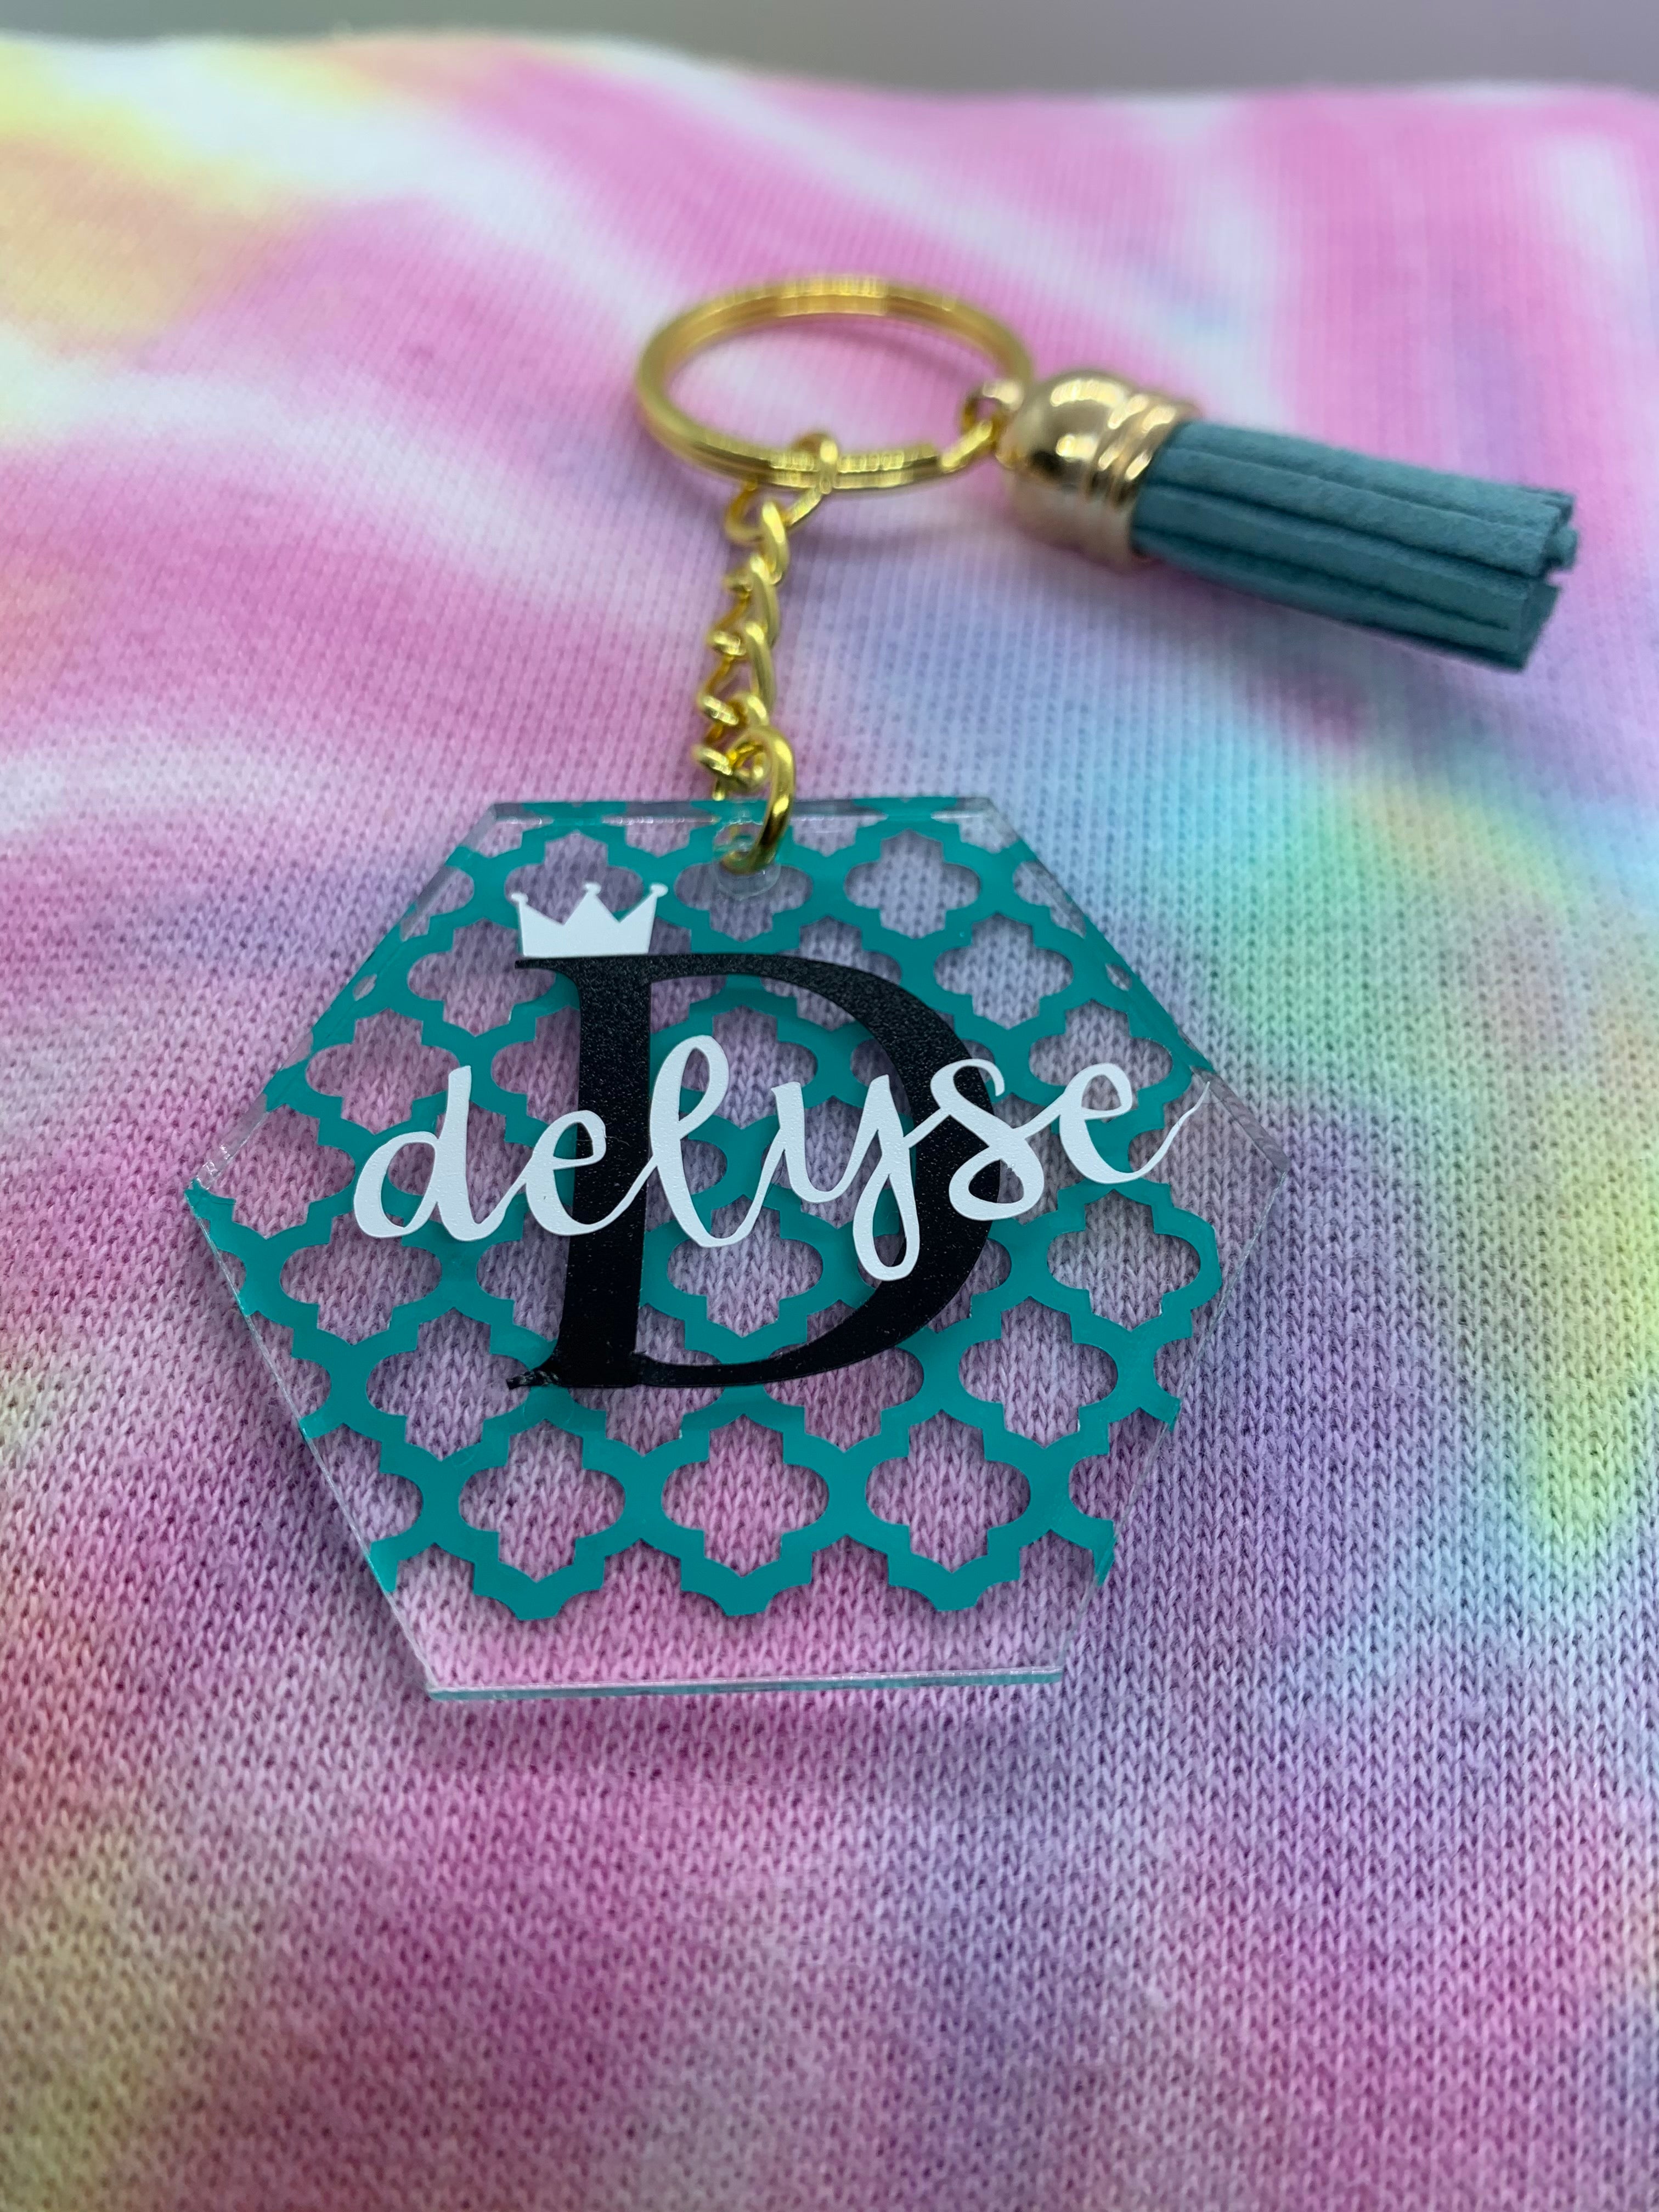 Princess Monogram Keychains – JDK Royal Boutique